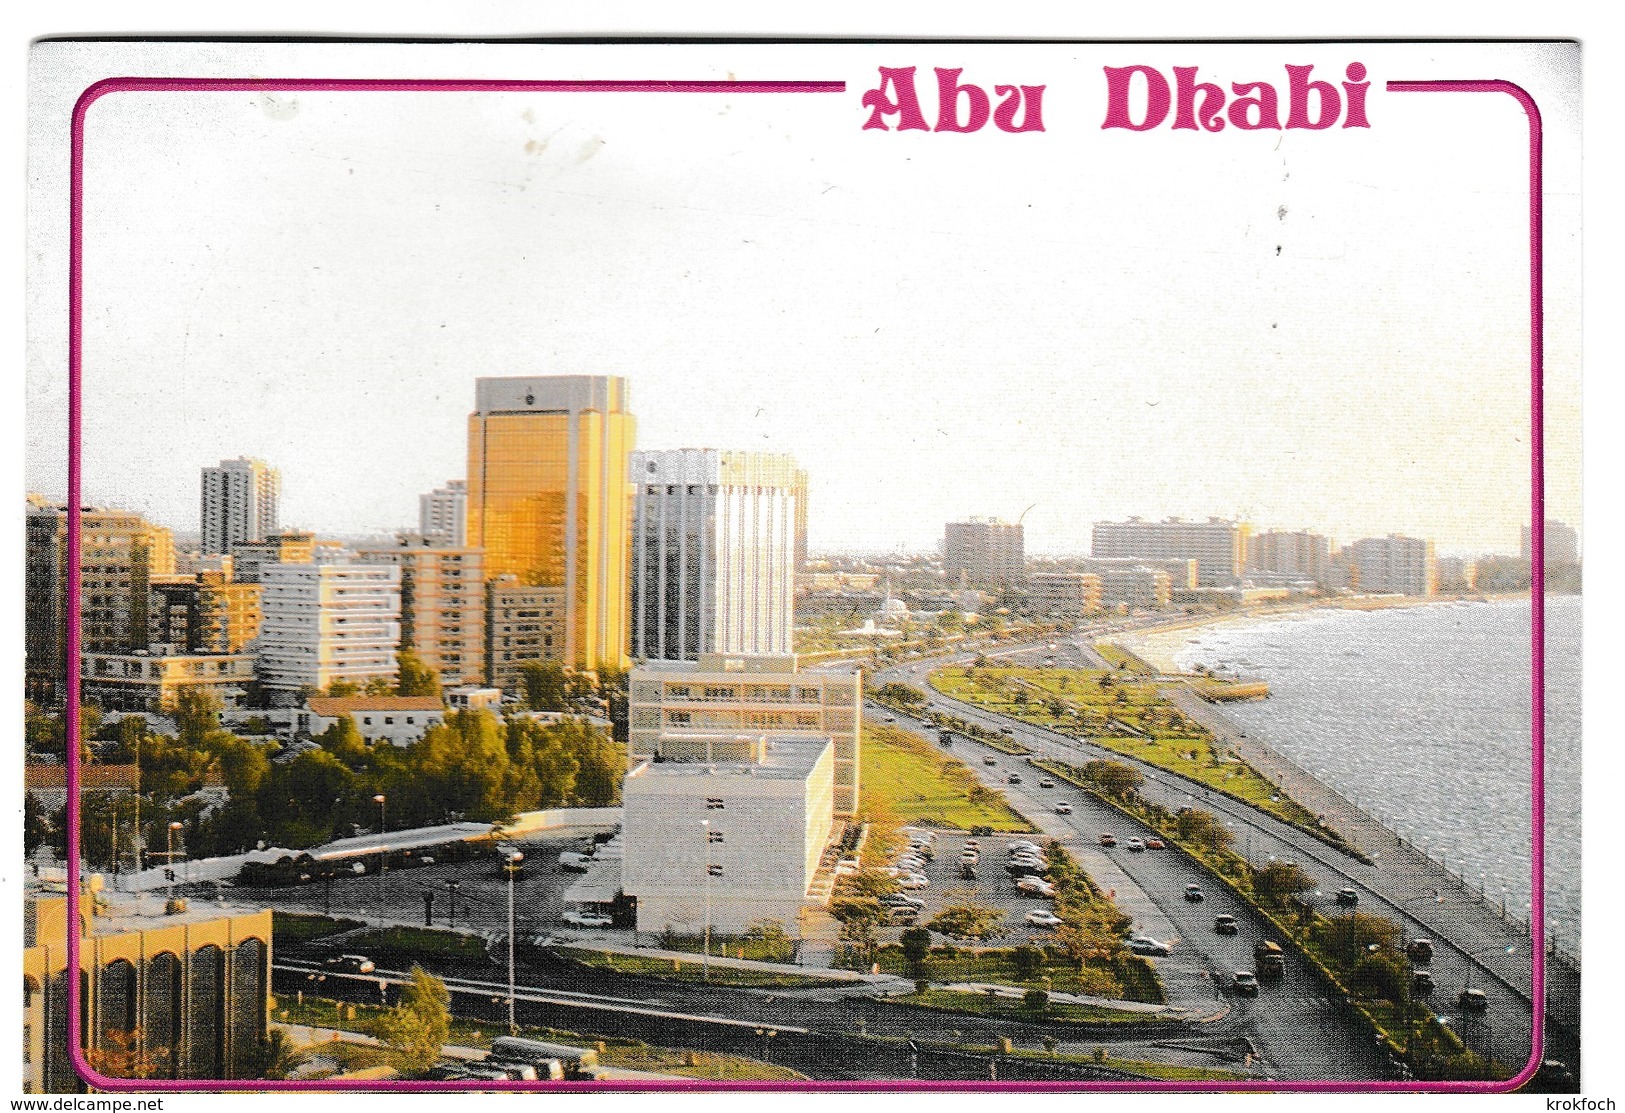 Abu Dhabi 1994 - UAE EAU - Ver. Arab. Emirate